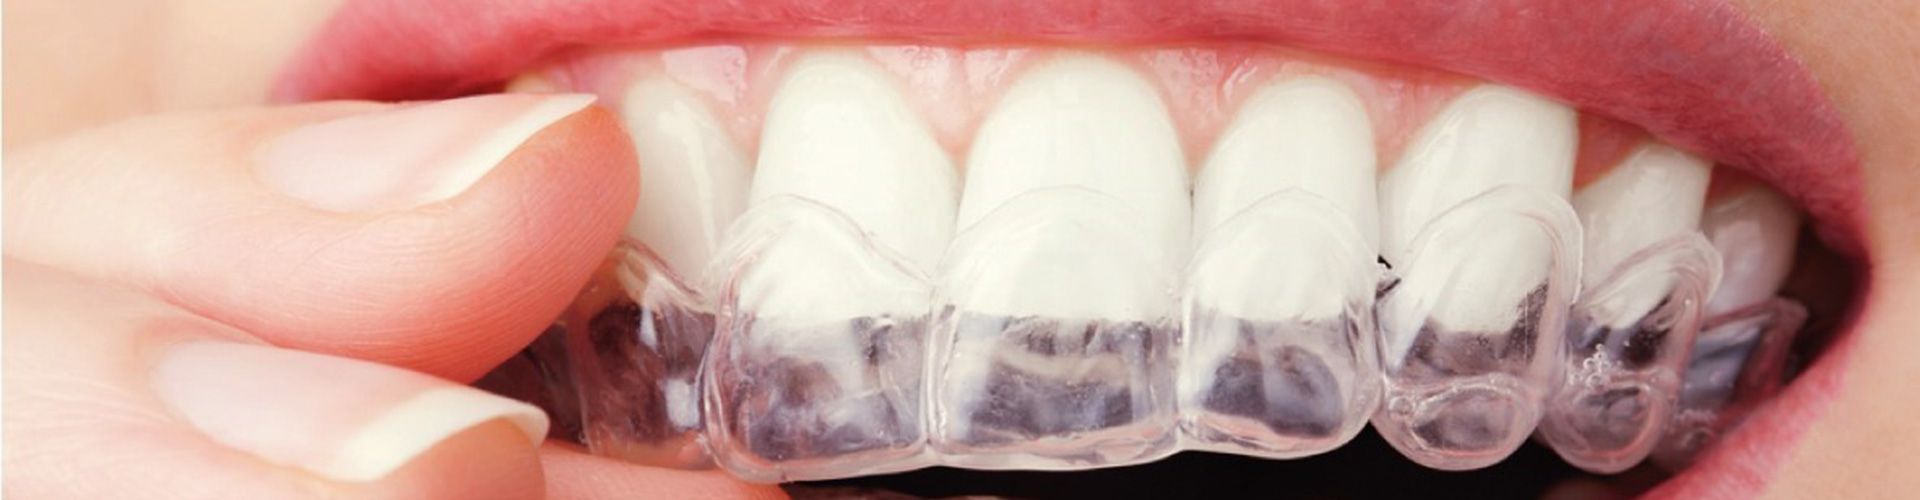 dental braces and orthodontics - Smile Dental Group Crewkerne